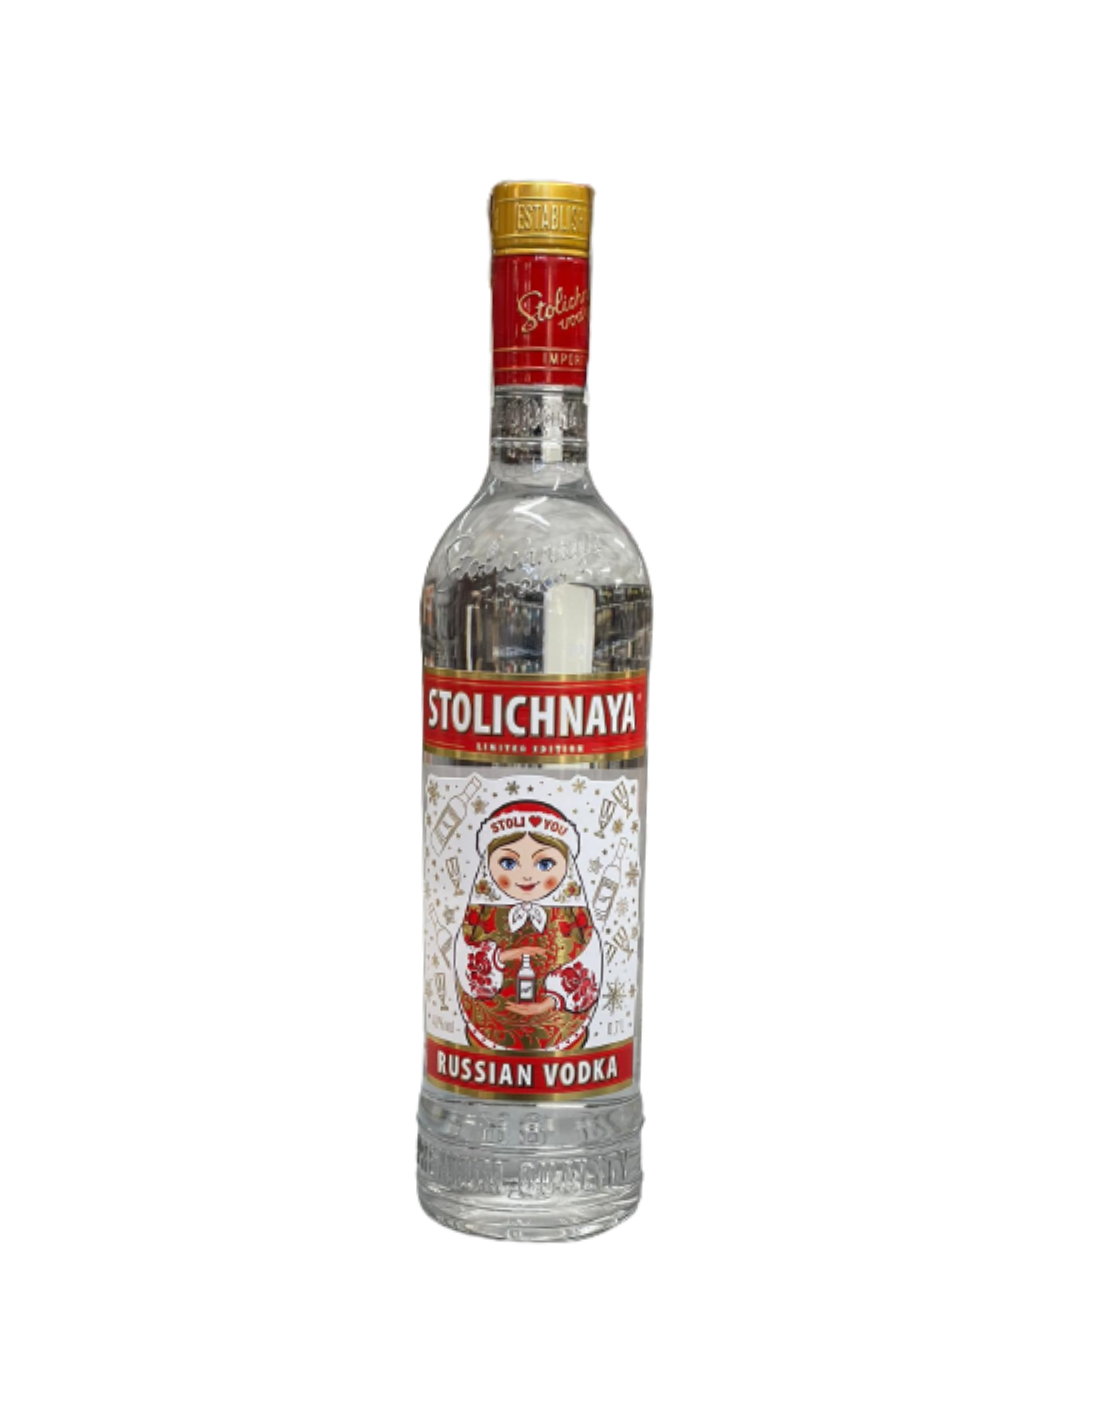 Vodca StoLichnaya Stoli Love You Limited Edition, 0.7L, 40% alc., Rusia alcooldiscount.ro